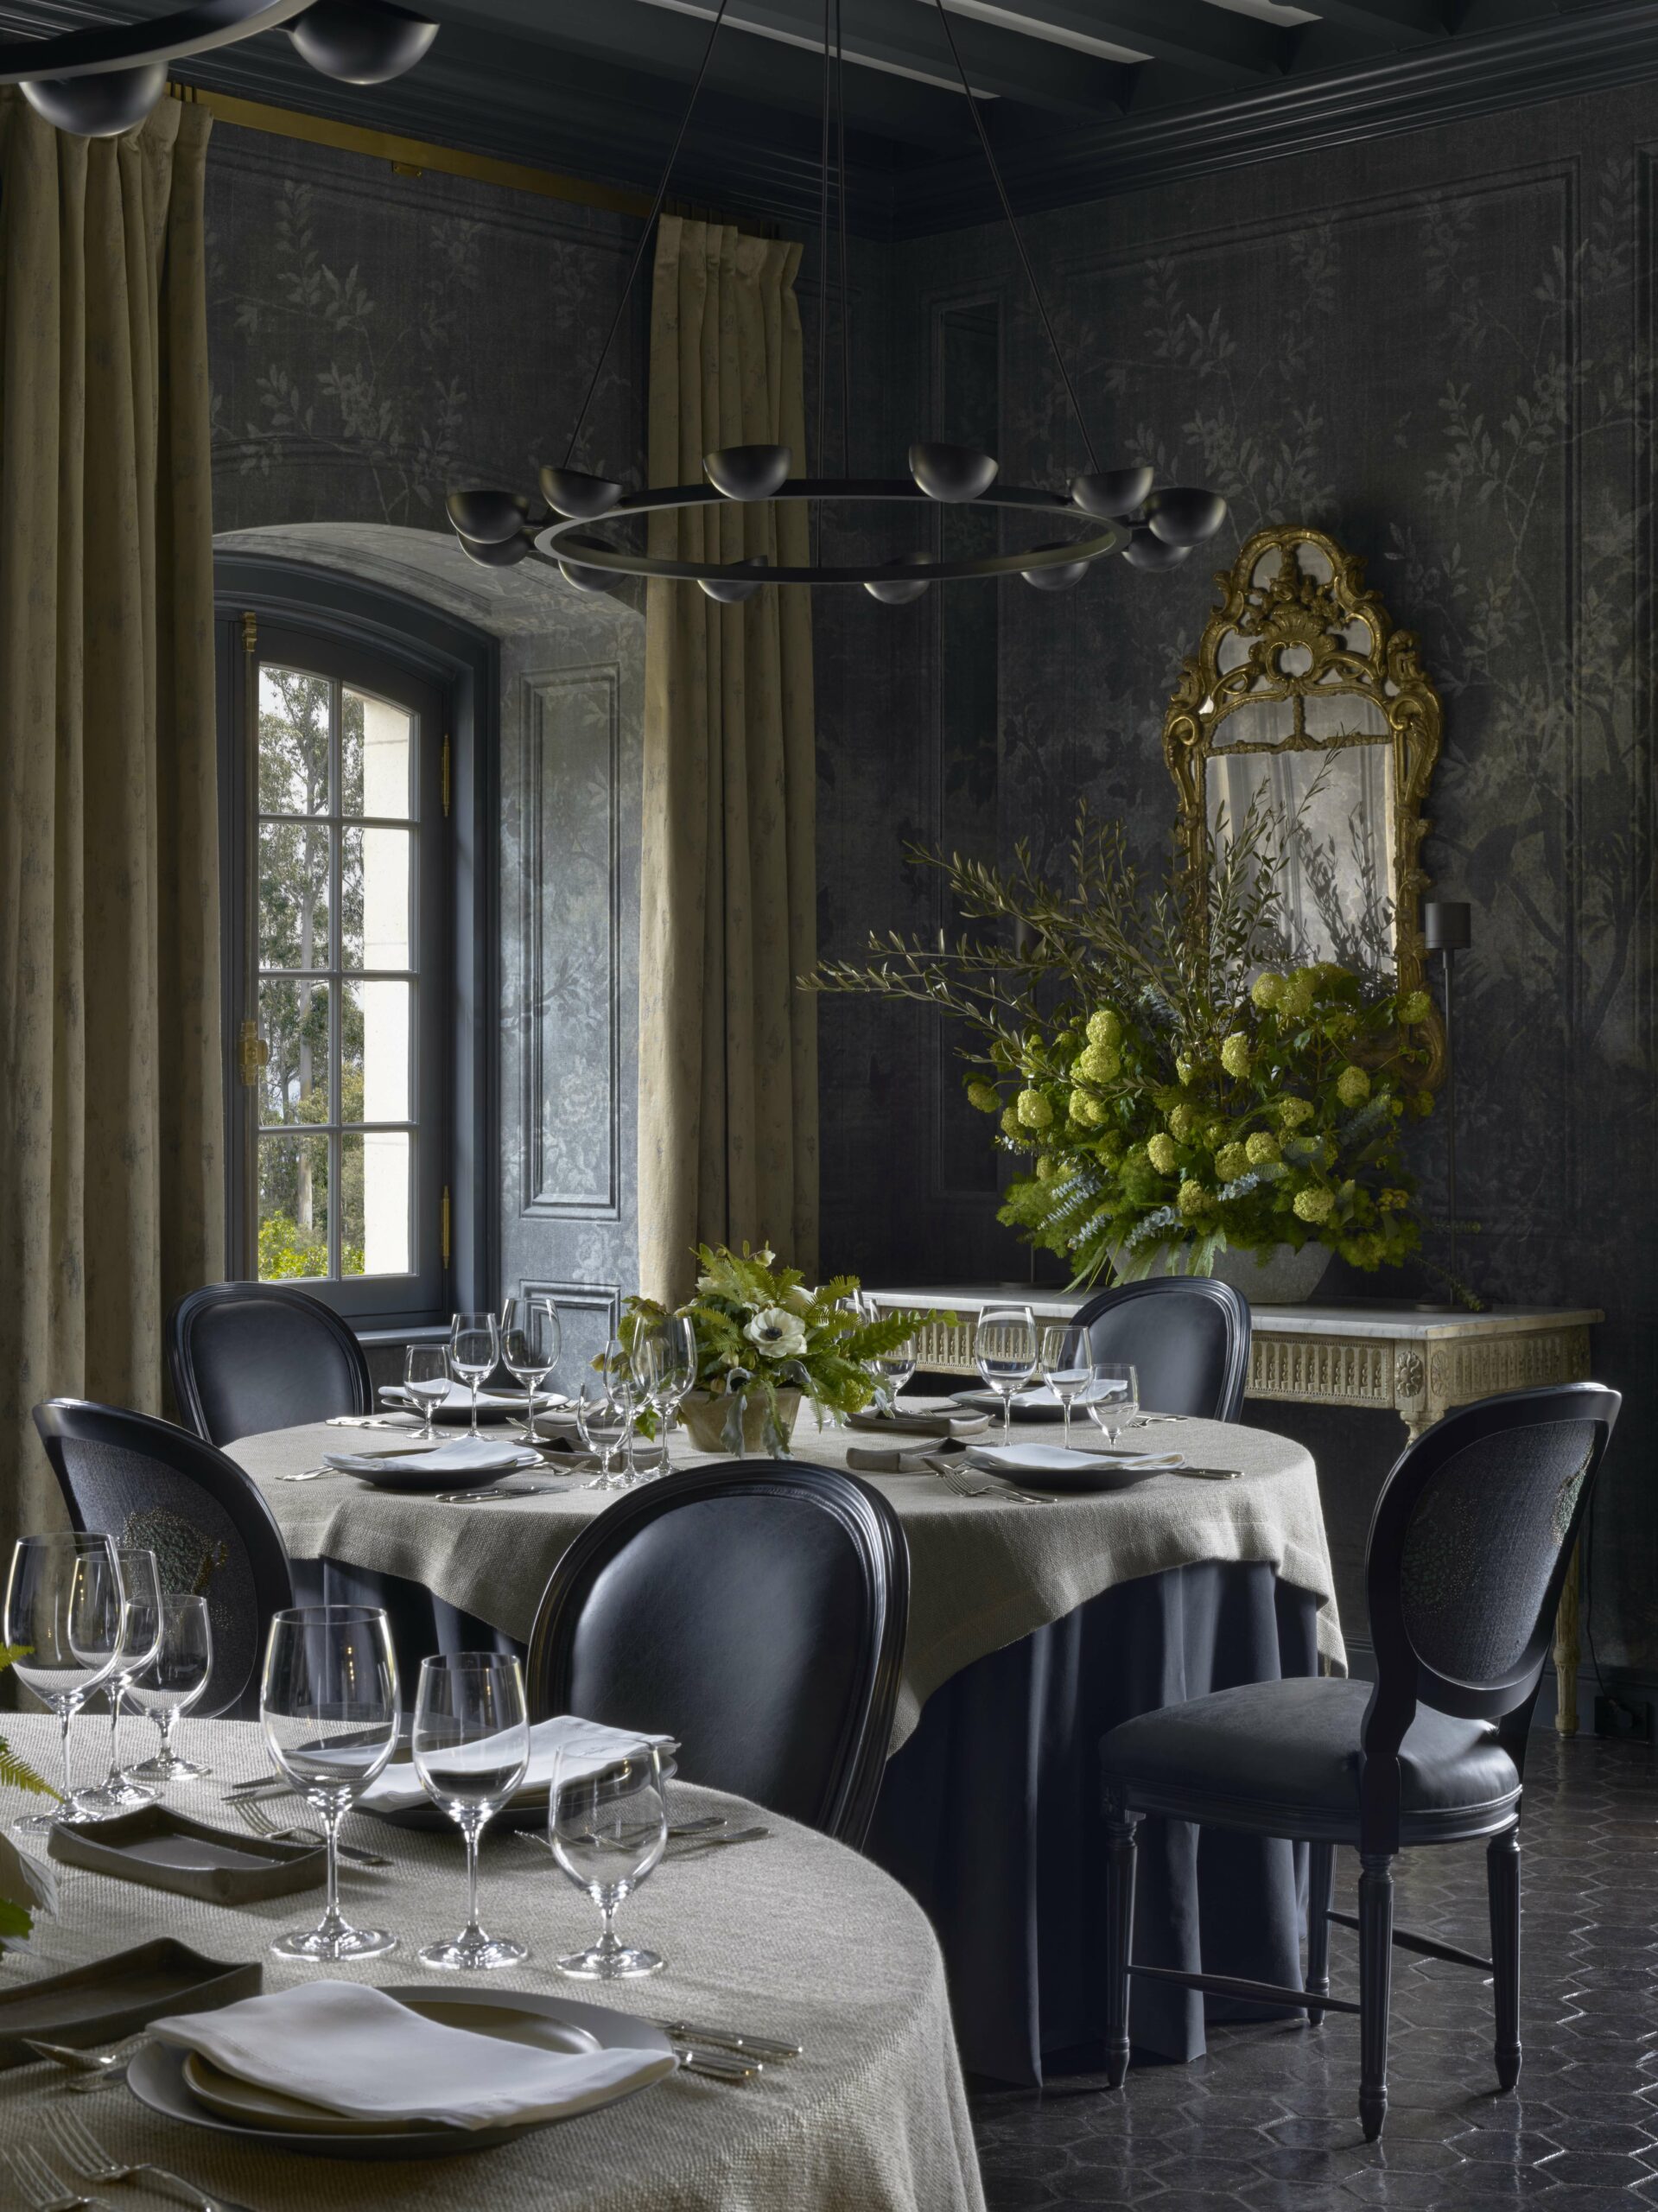 The dining room at Jordan Vineyard & Winery in Healdsburg. (Jose Manuel Alorda)